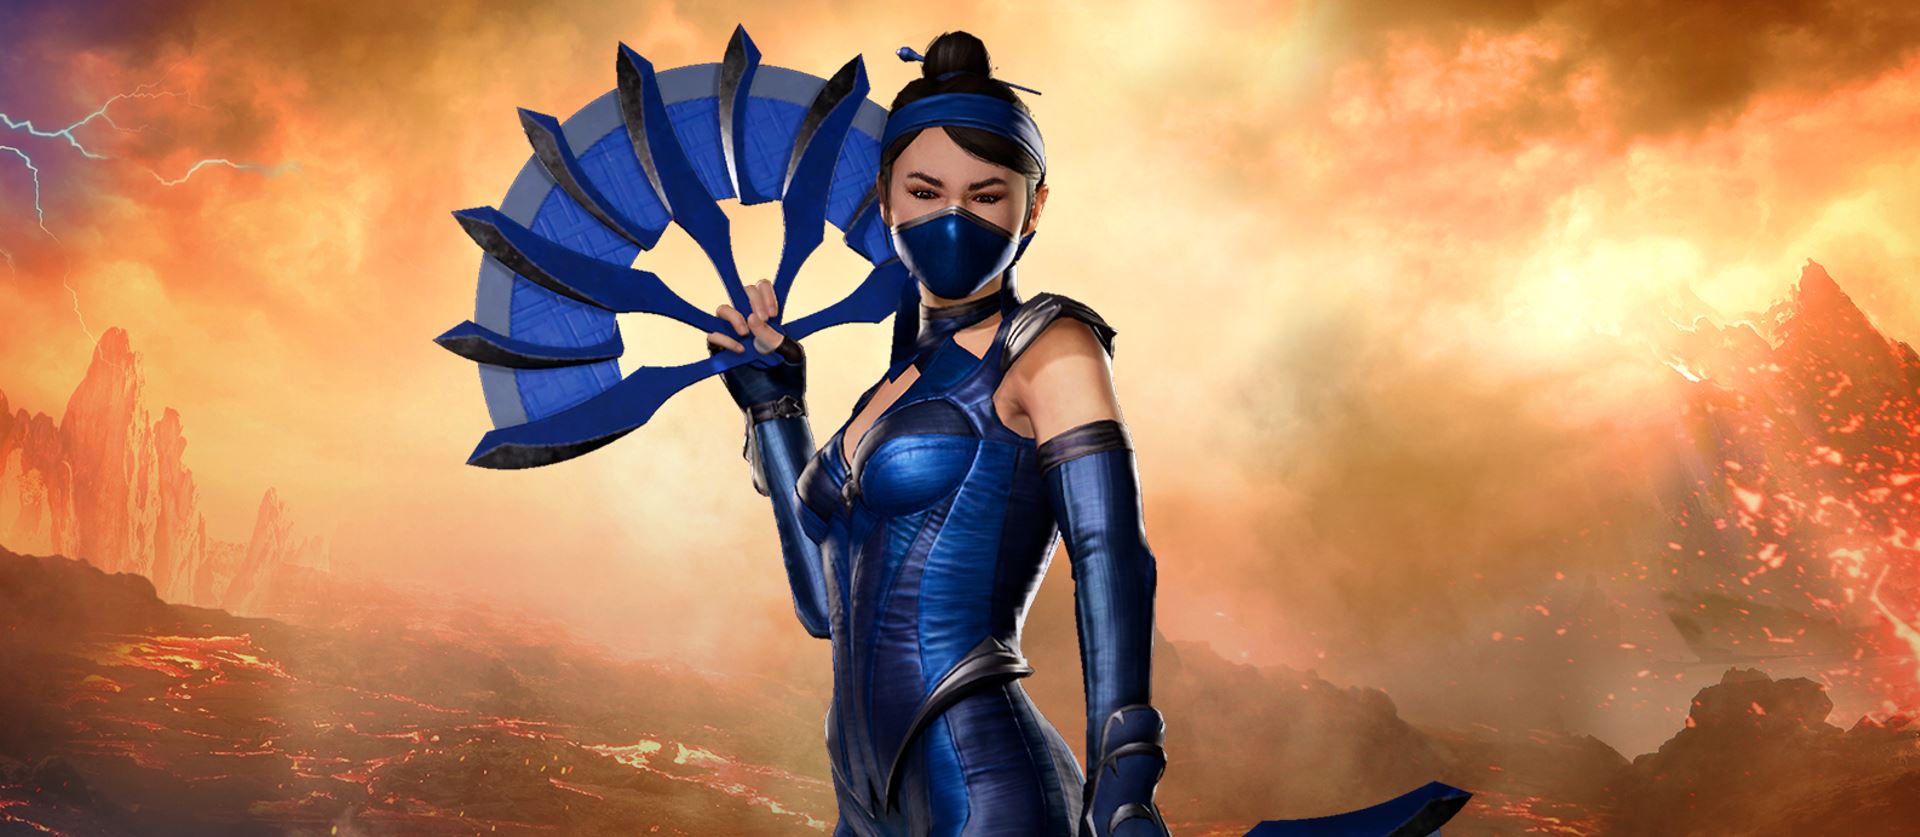 Mortal Kombat 12' release date, details: Story might be set